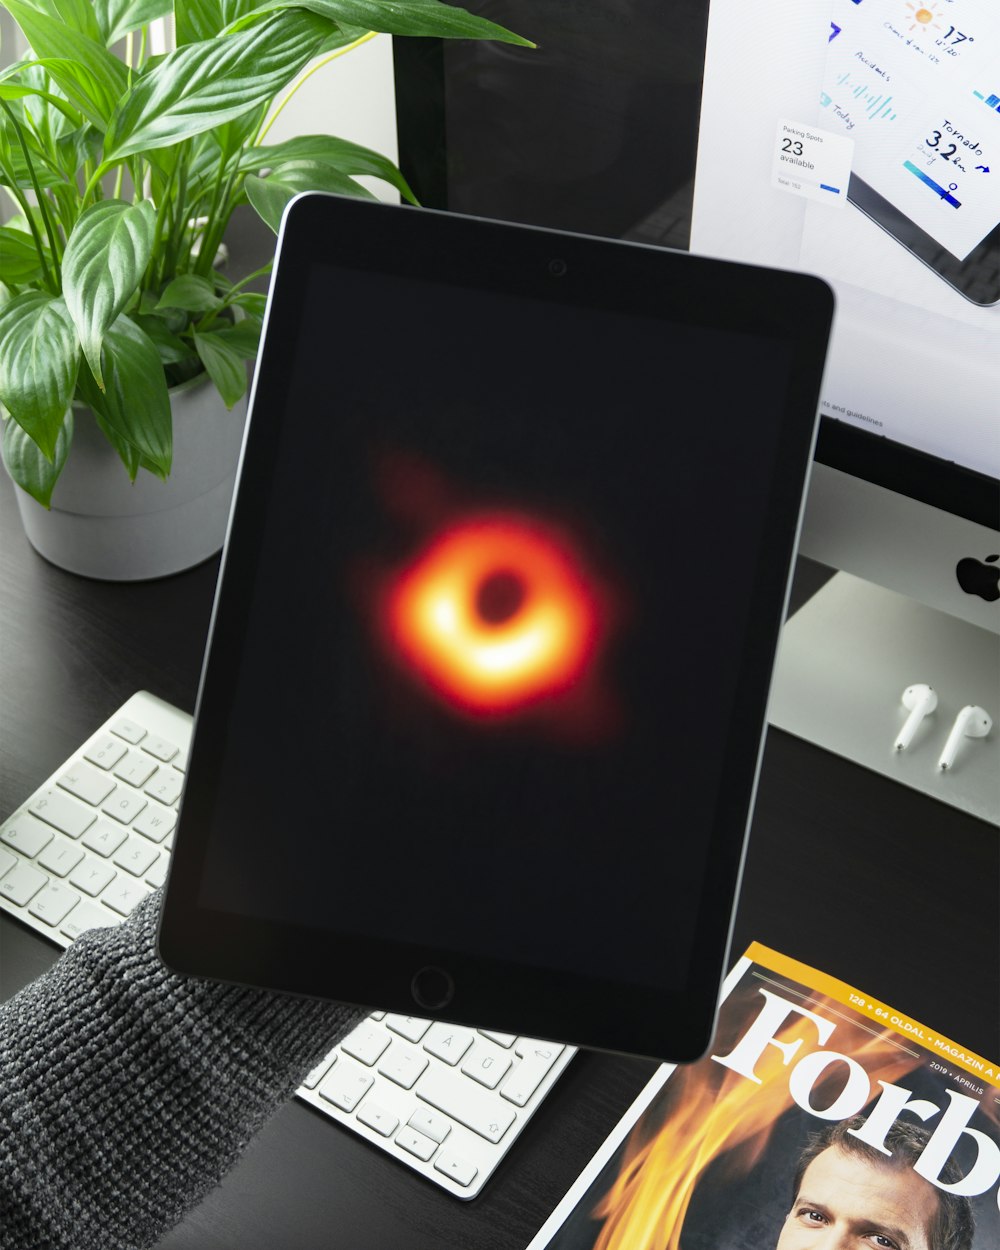 iPad exibindo círculo vermelho